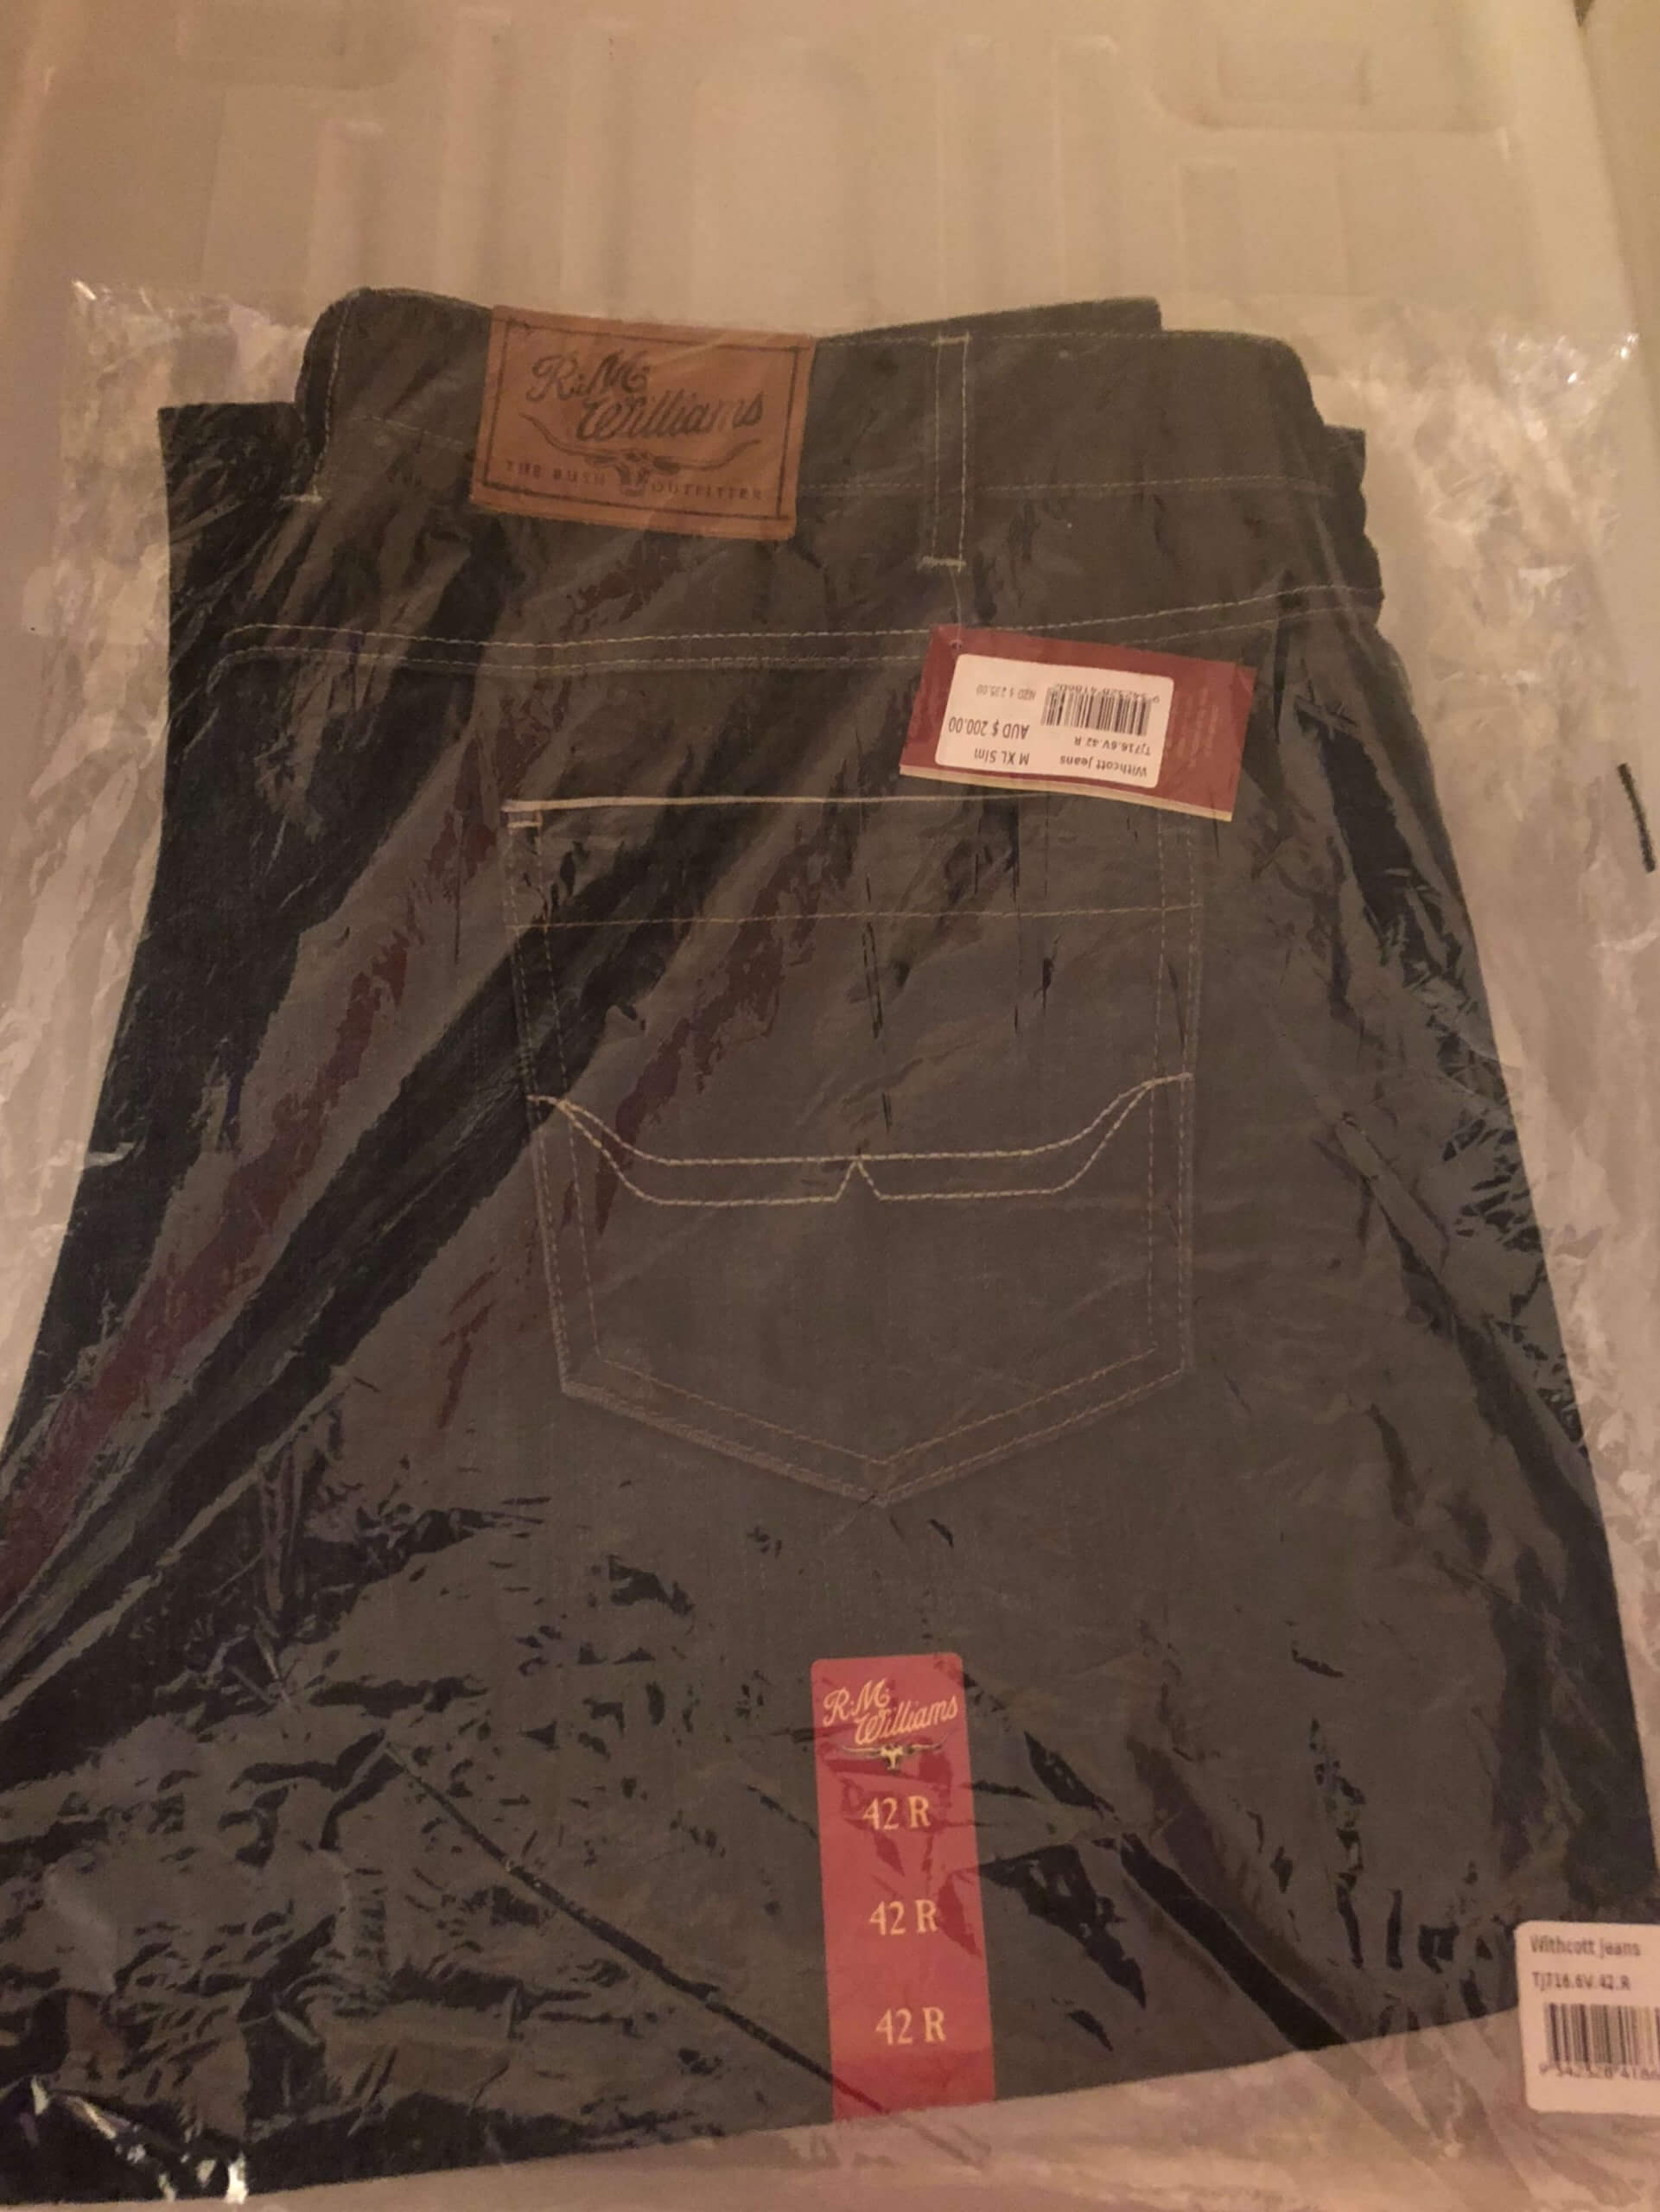 RM Williams Mens 'Dusty' Indigo Wash Slim Fit Denim Jeans